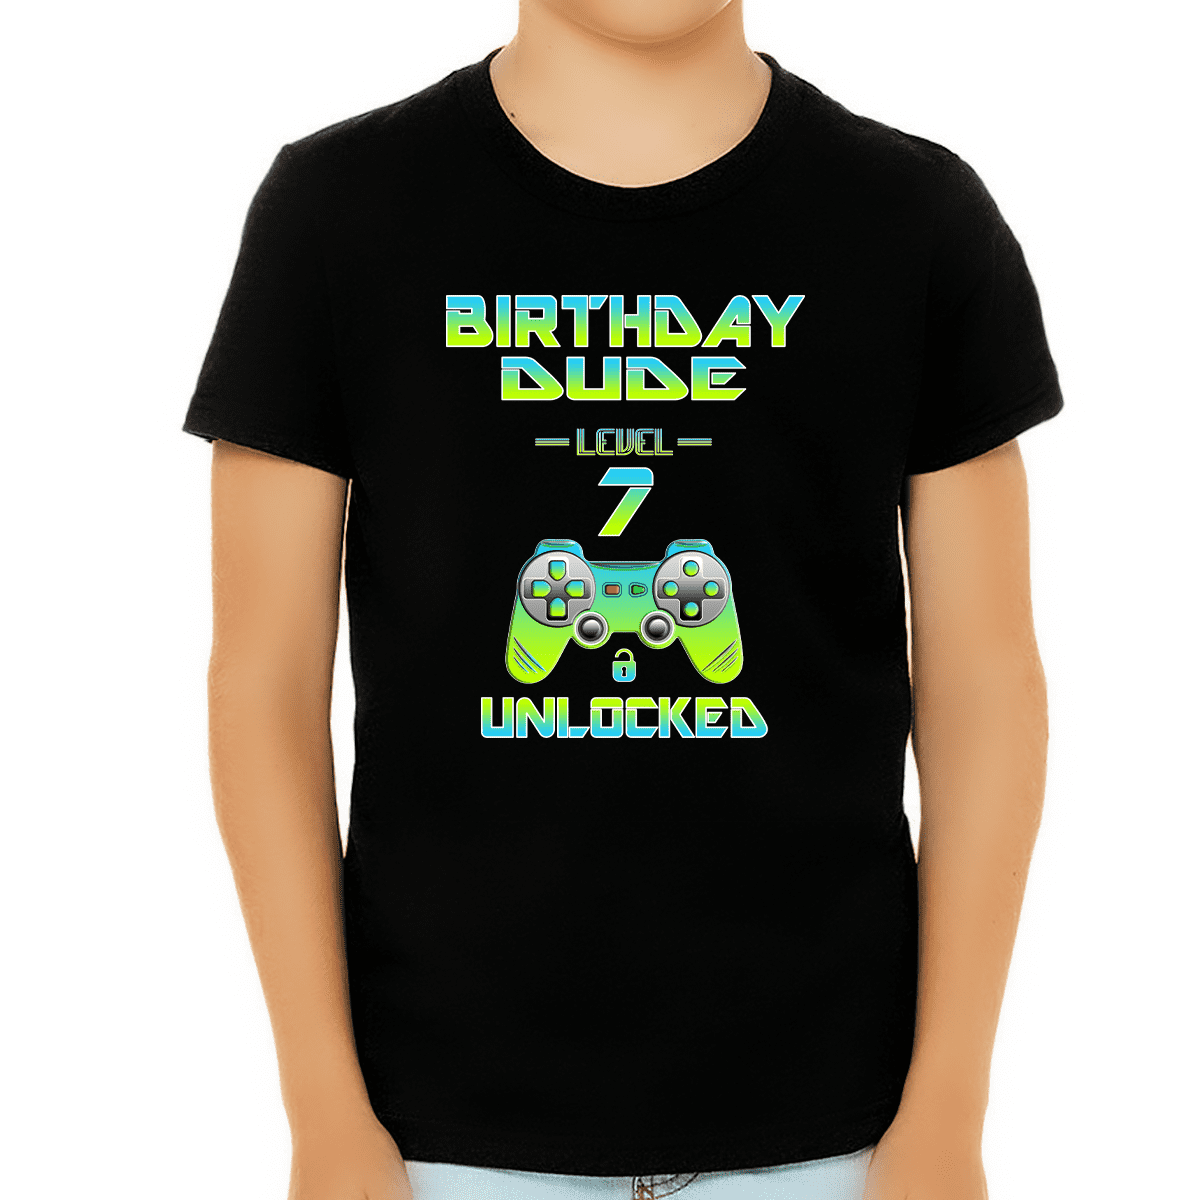 Kids Level 7 Unlocked 7 Years Old Video Gamer Birthday Gift Boys T-Shirt